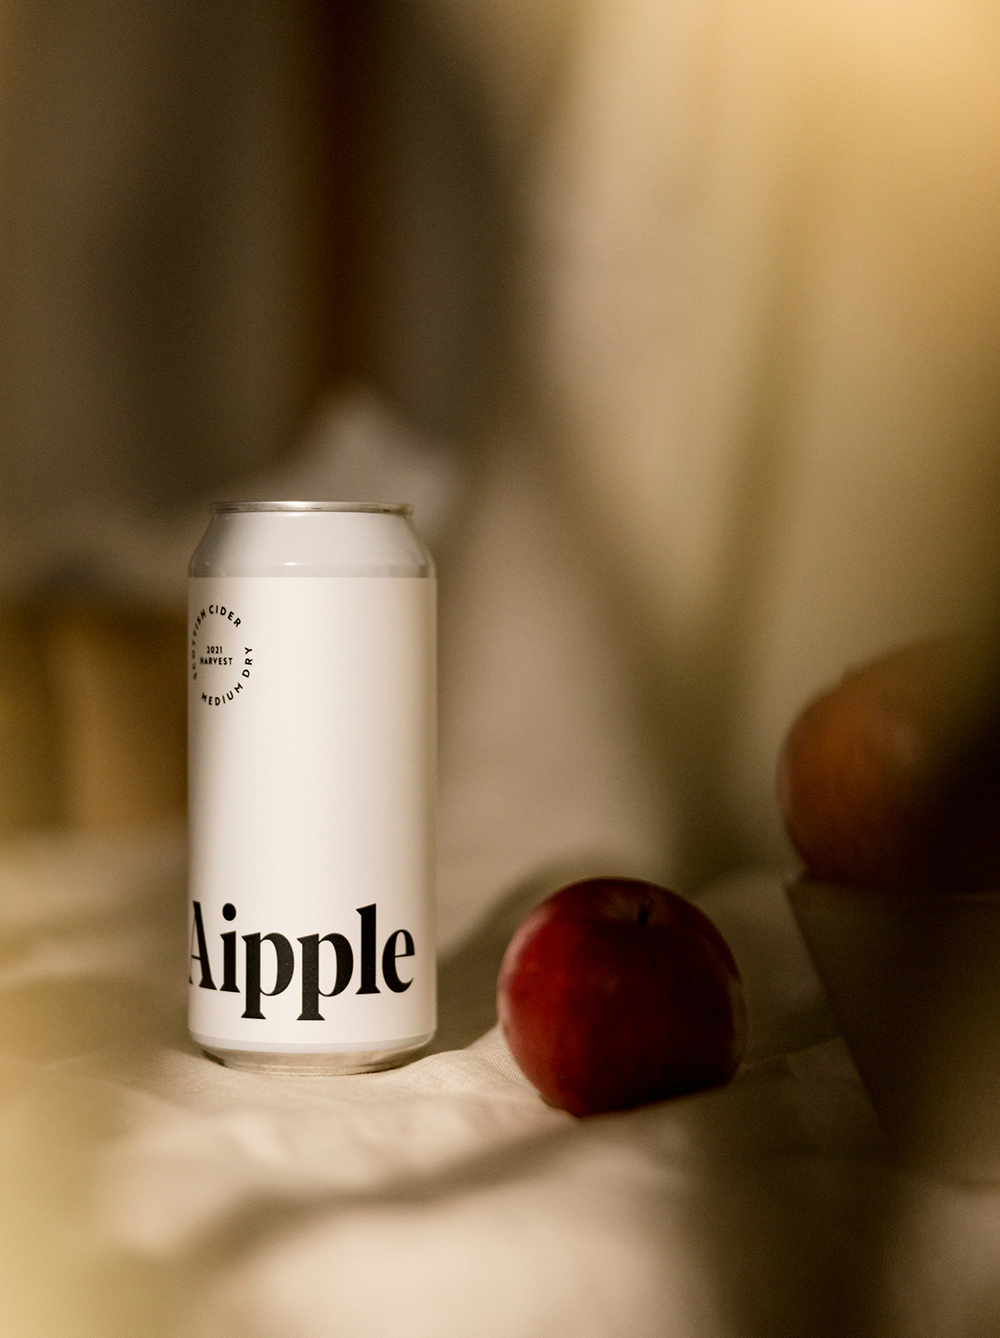 Aipple Cider Packaging Design